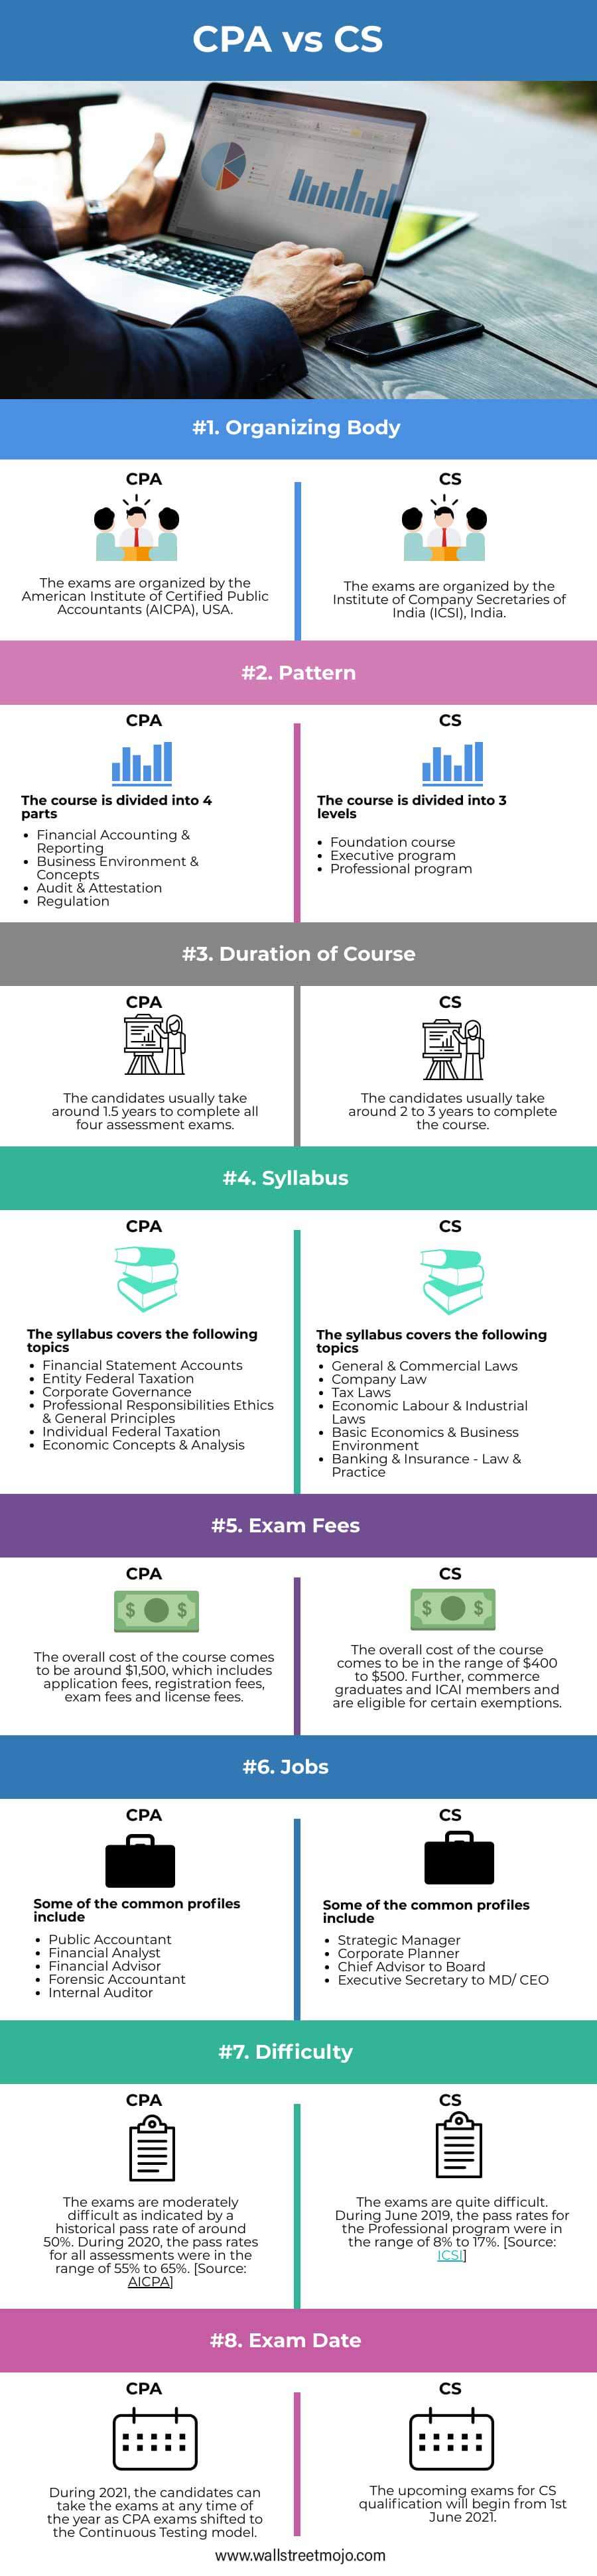 CPA-vs-CS-info